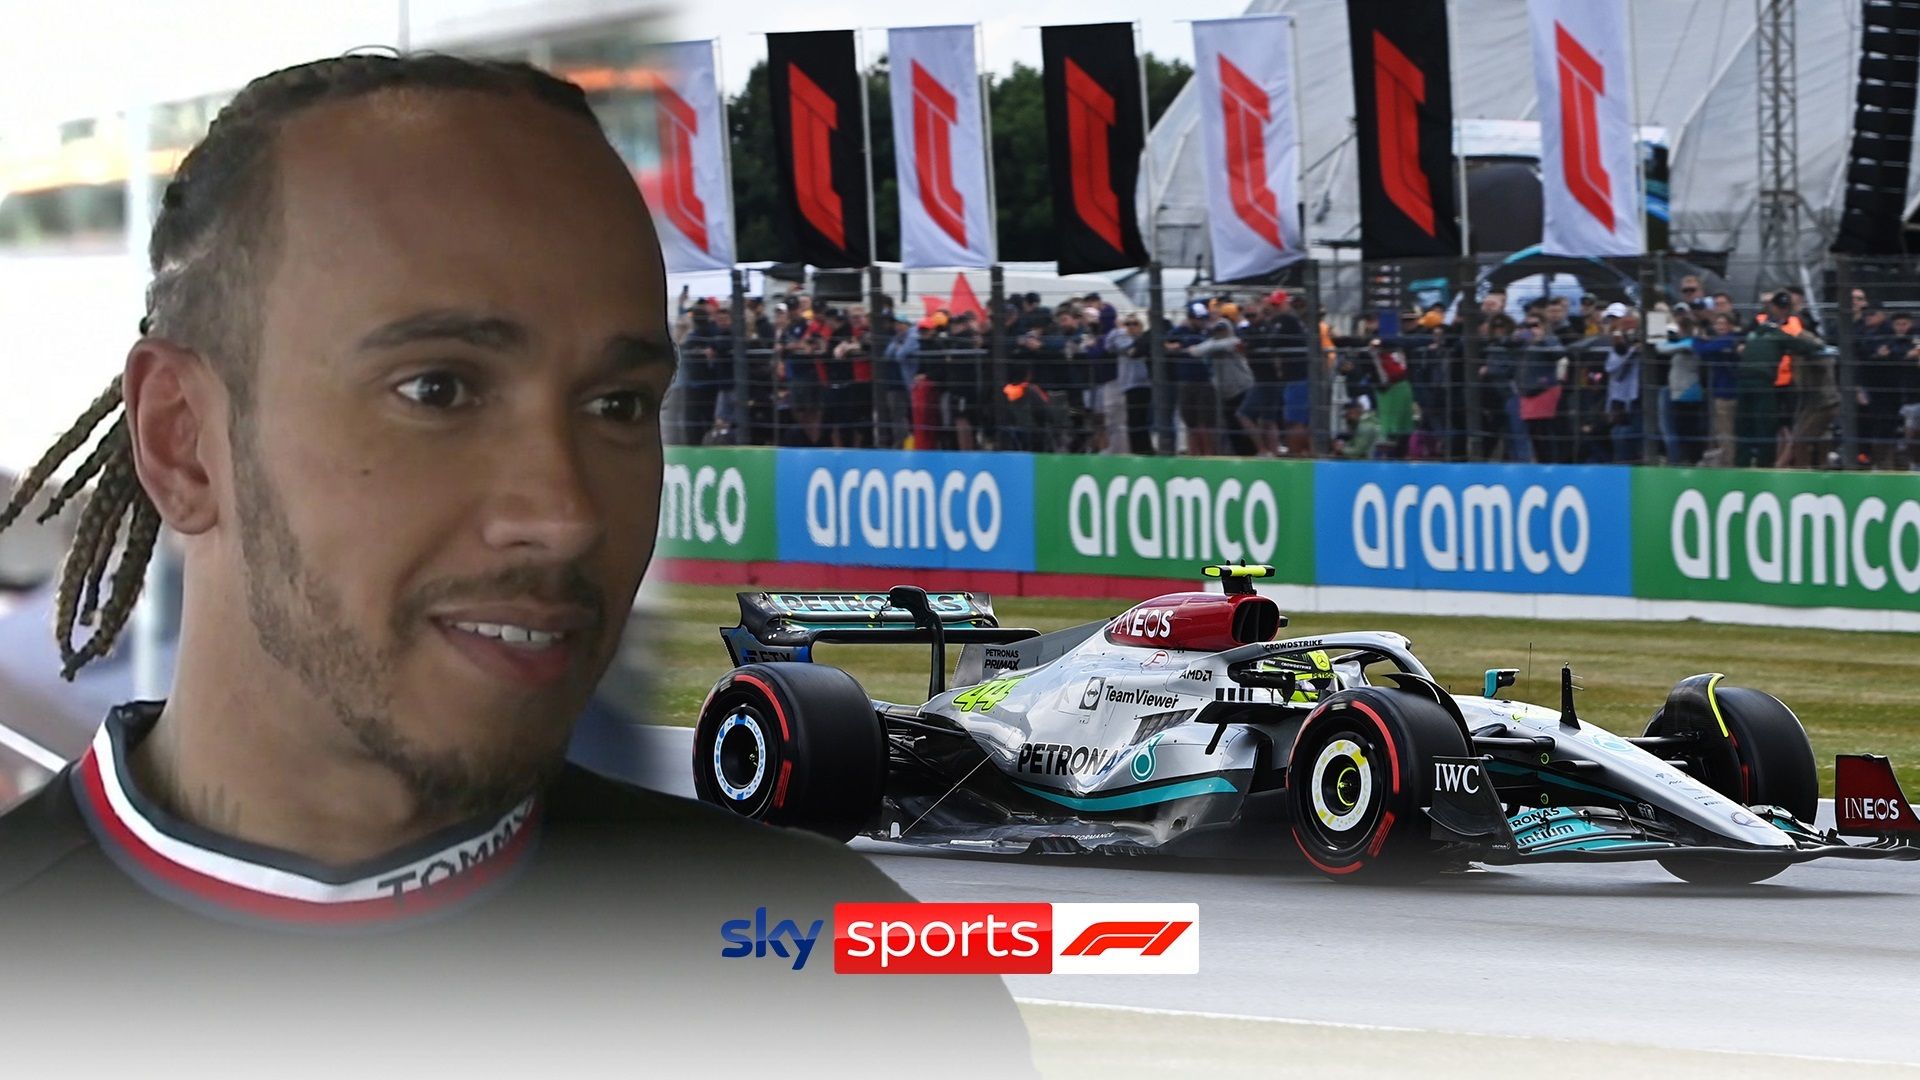 Hamilton embraces Merc improvement at 'hair-raising' Silverstone